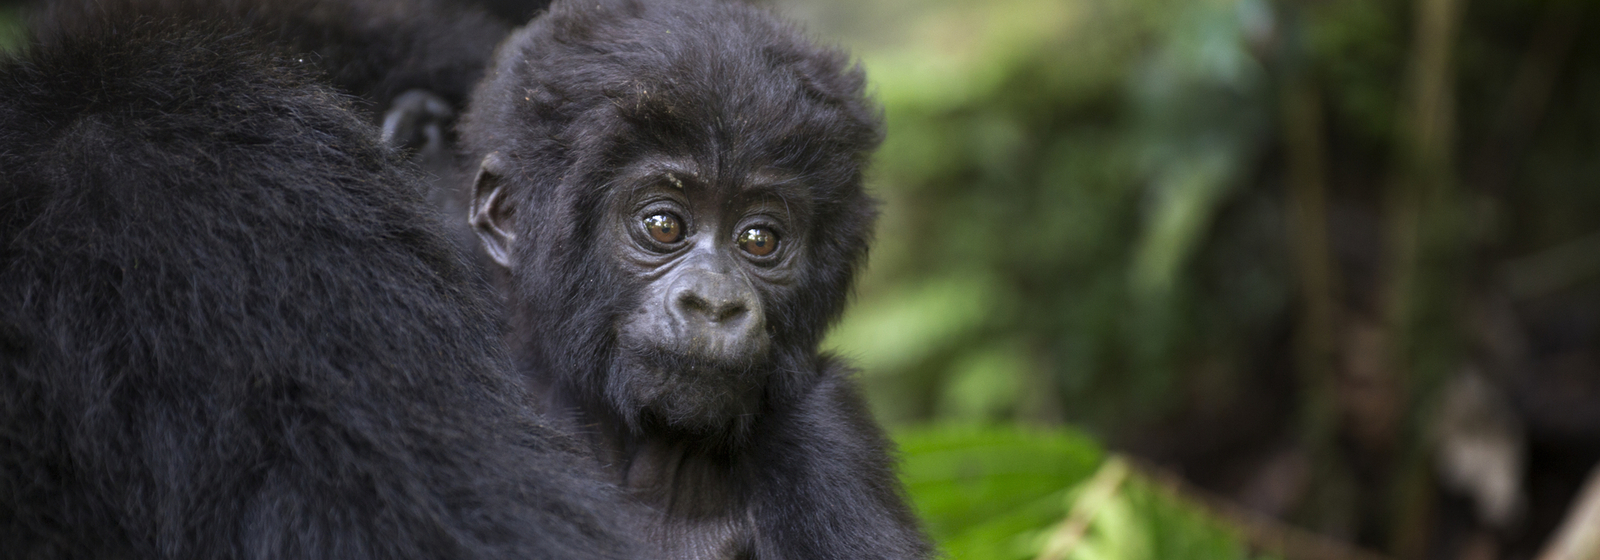 Support gorilla conservation